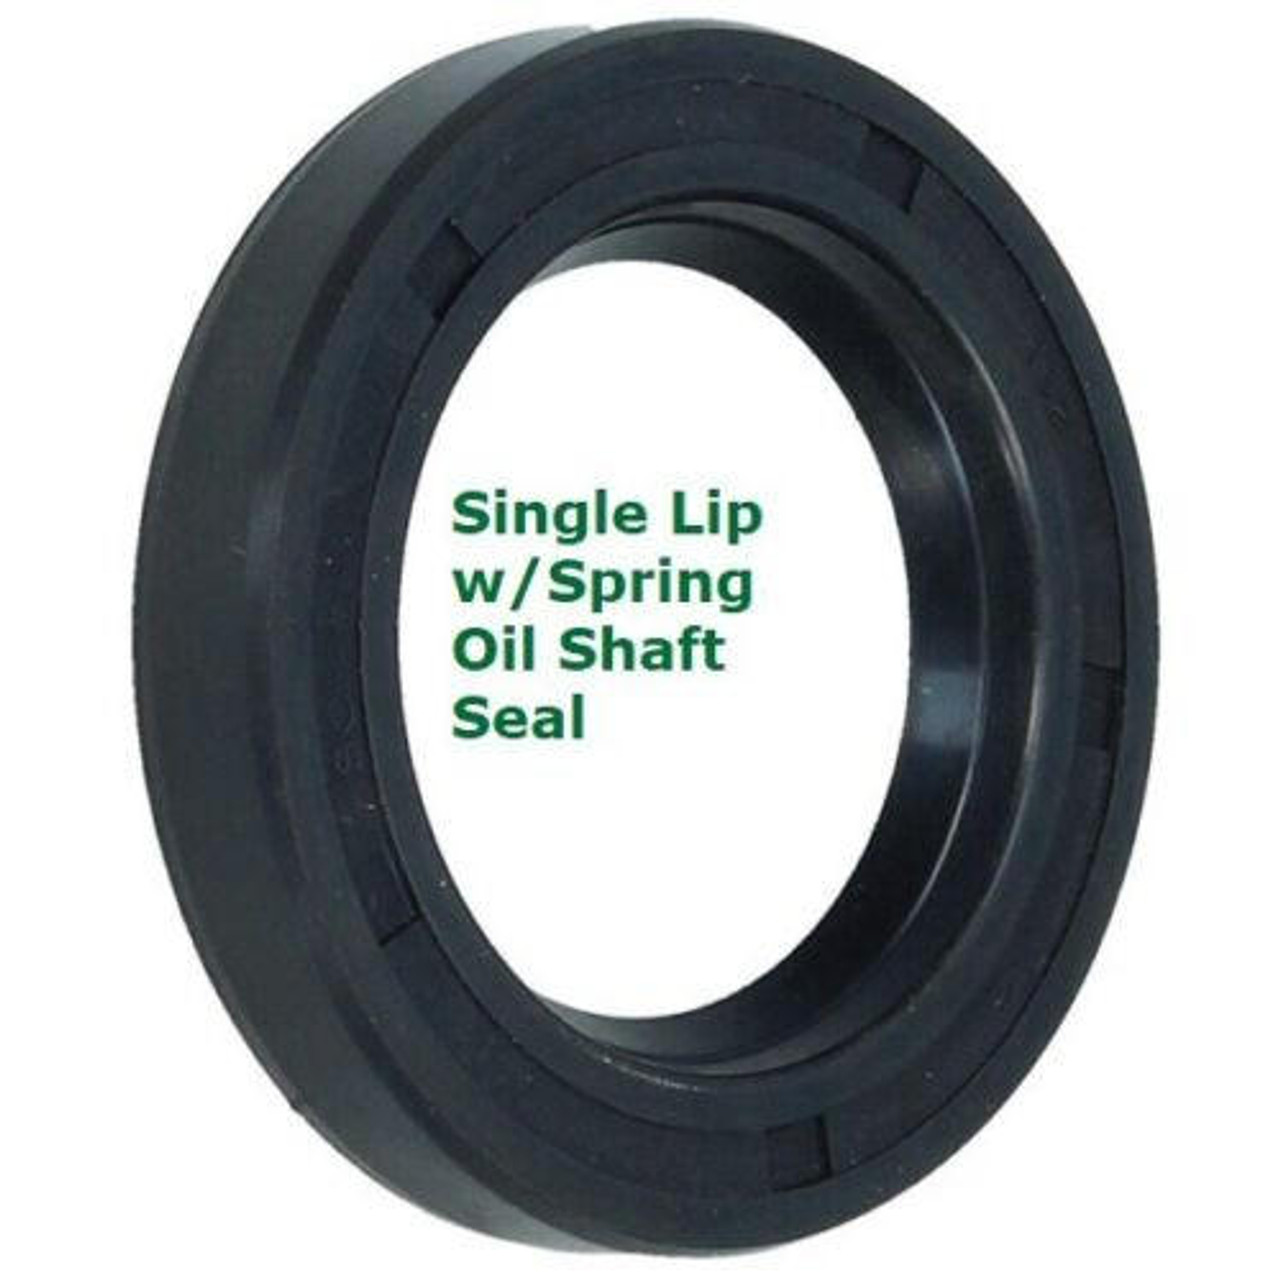 Metric Oil Shaft Seal 40 x 60 x 7mm Single Lip   Price for 1 pc